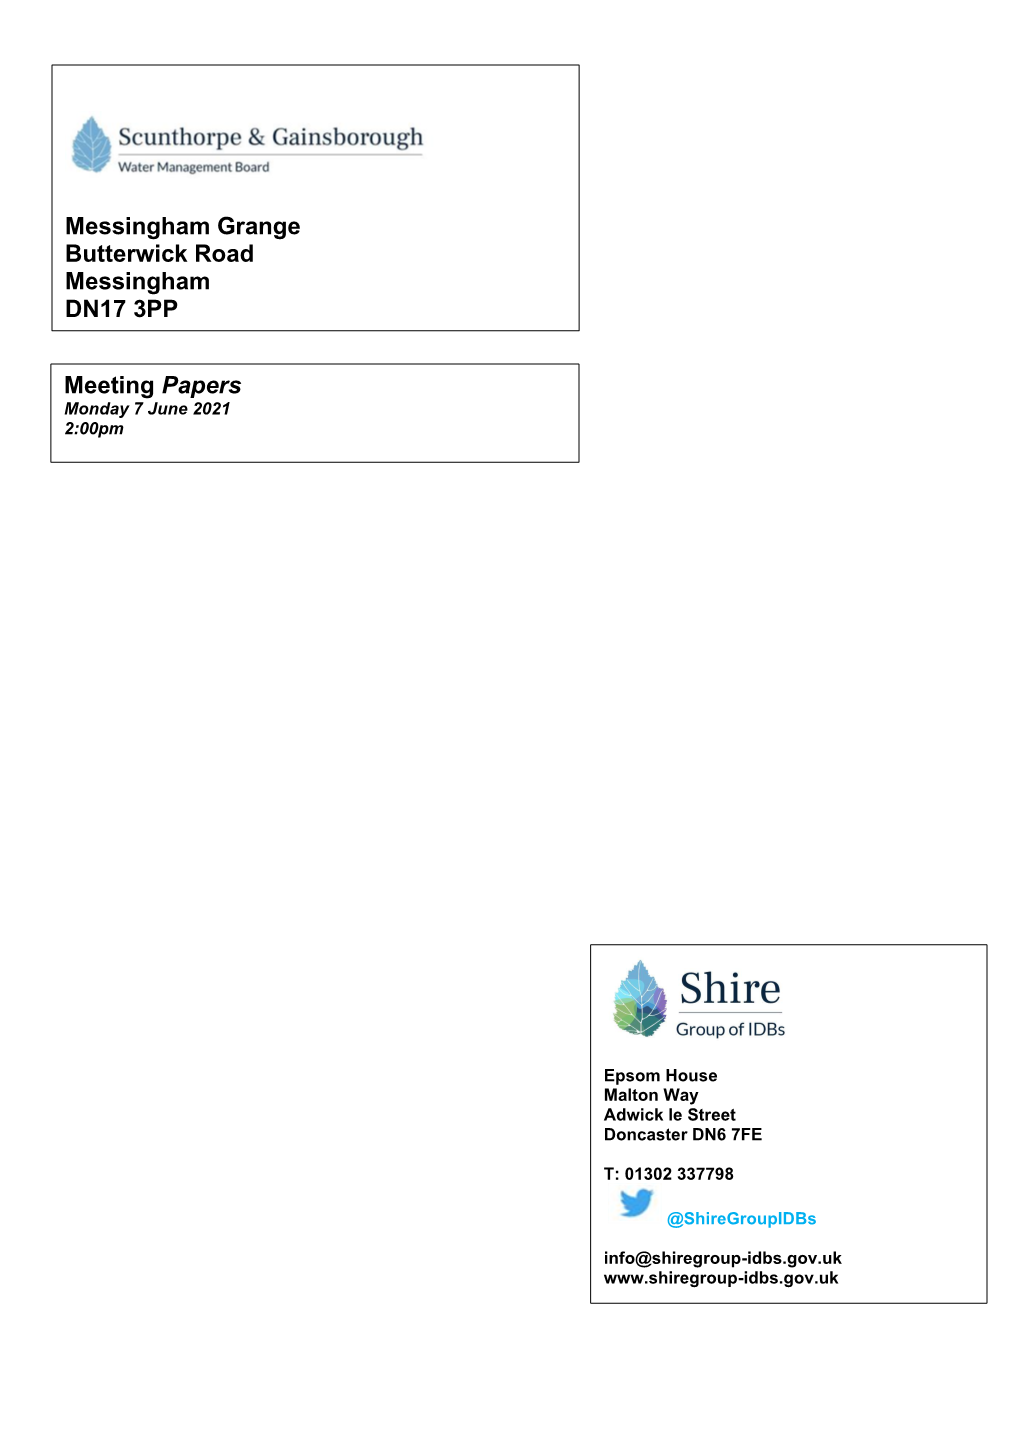 Scunthorpe & Gainsborough WMB Meeting Papers 7-Jun-2021